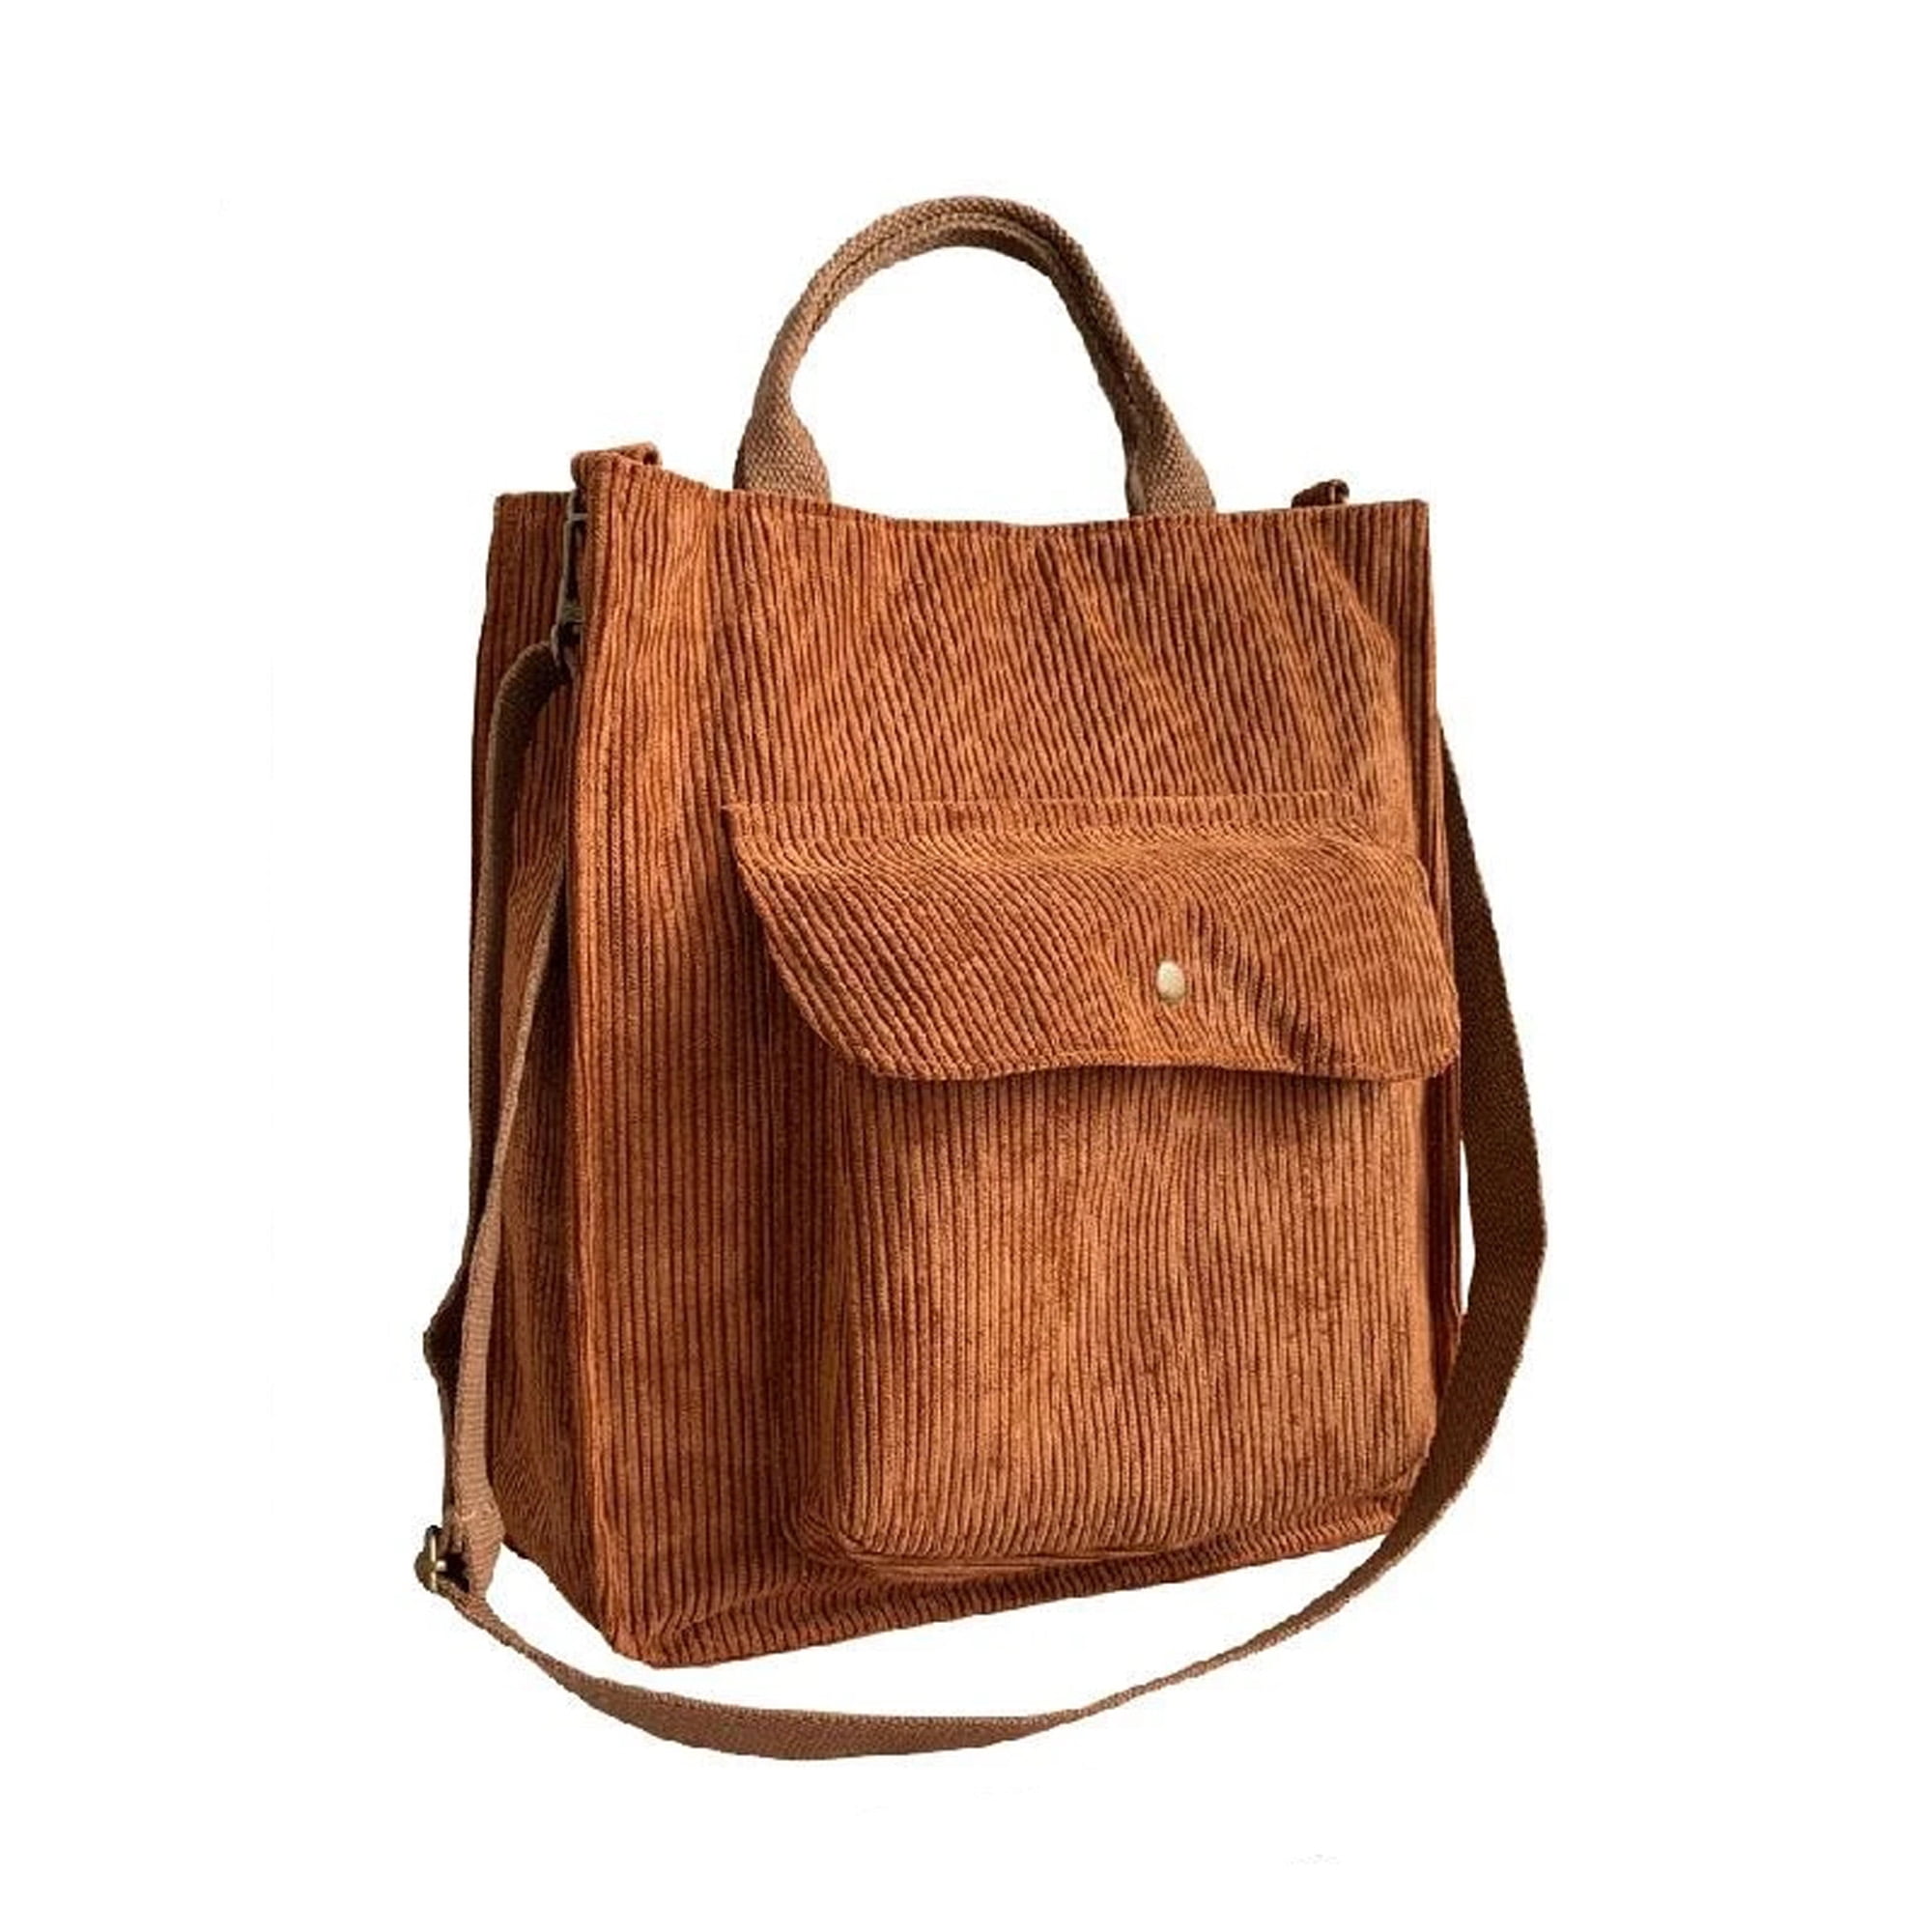 Where can I find a high quality corduroy tote bag? : r/handbags